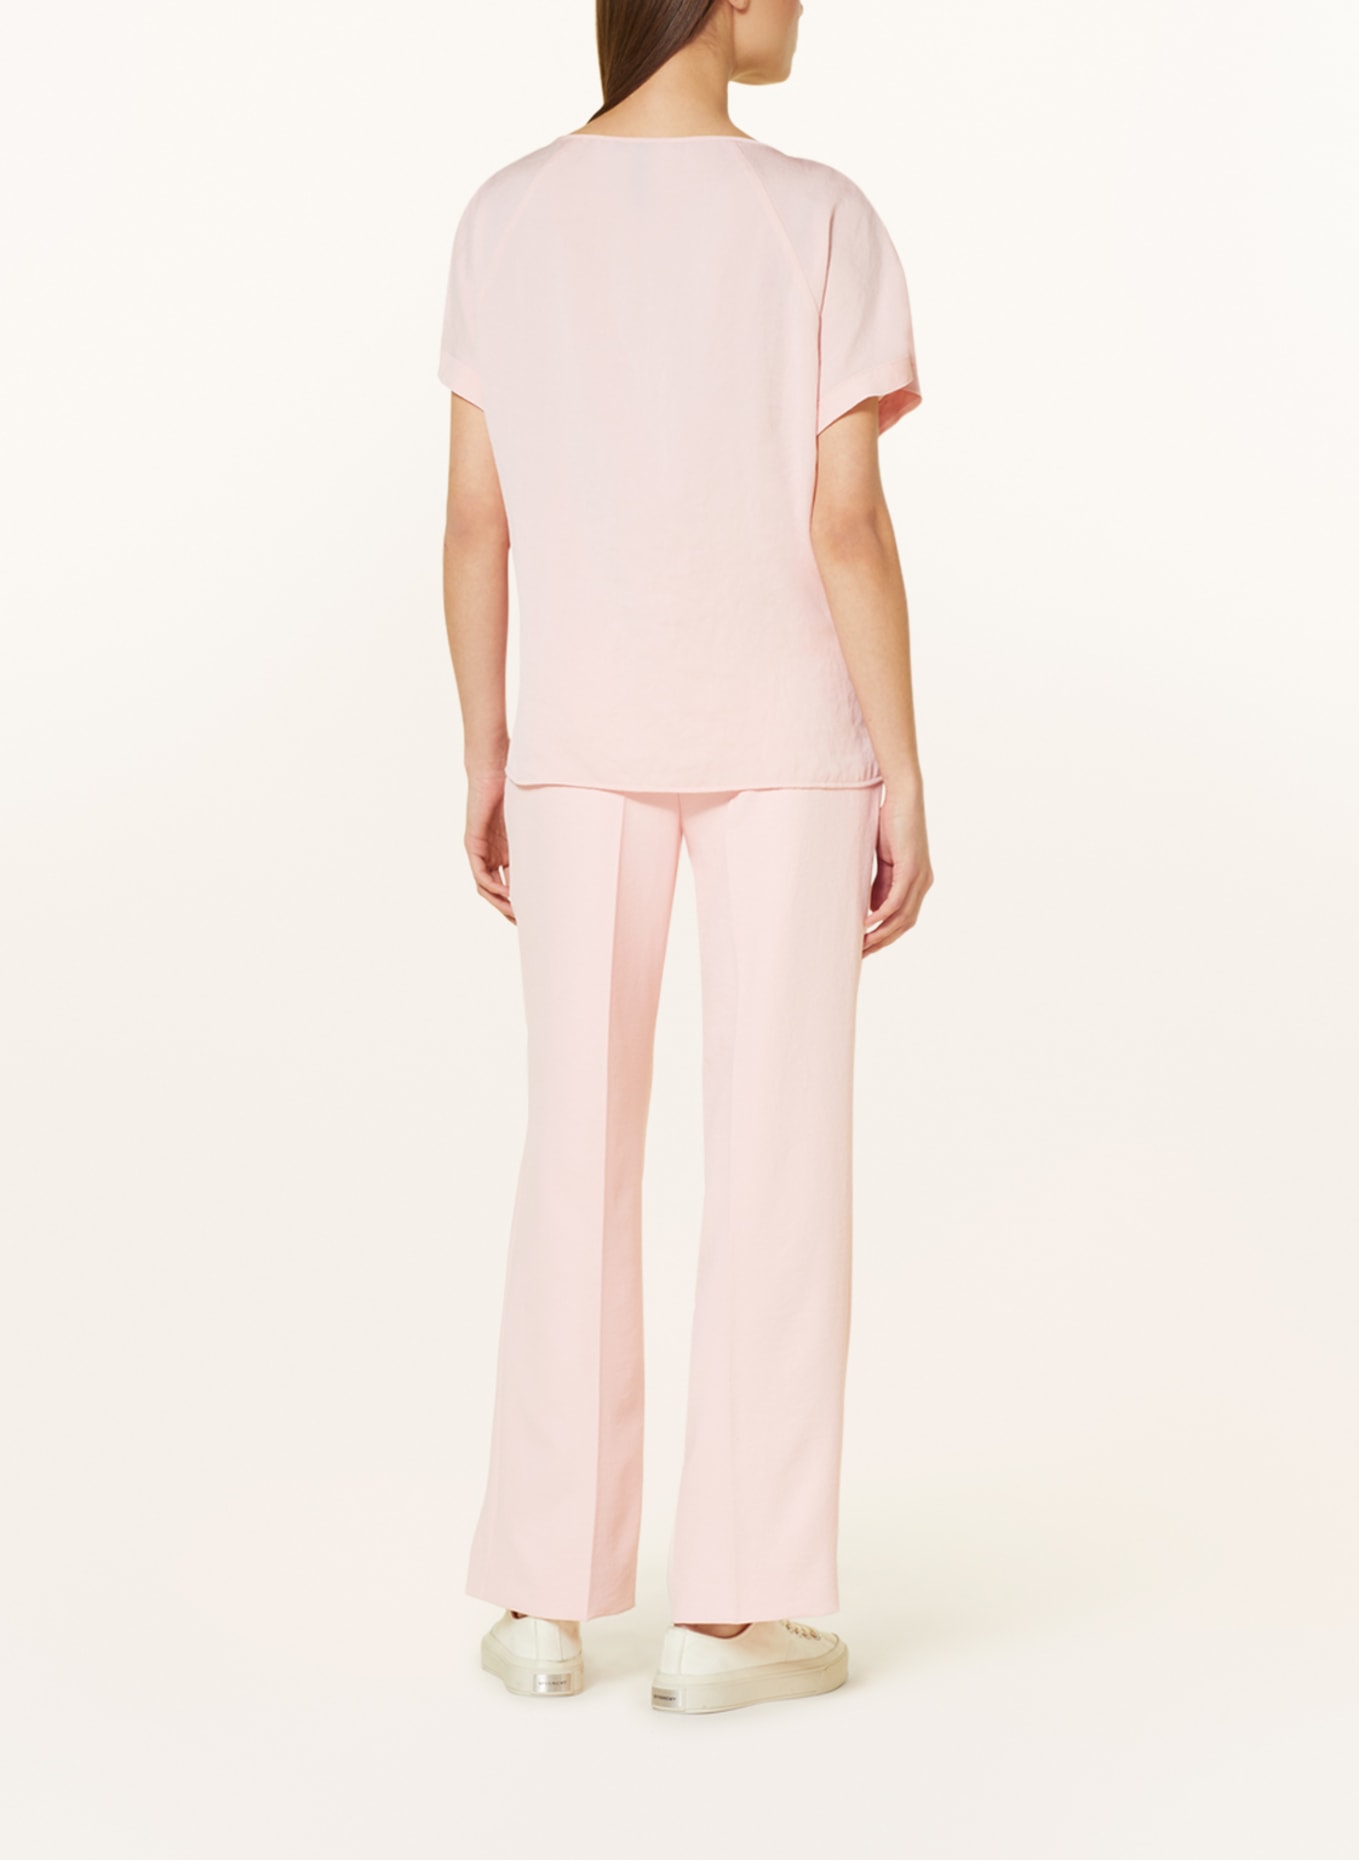 MARC CAIN Blusenshirt, Farbe: 210 soft powder pink (Bild 3)